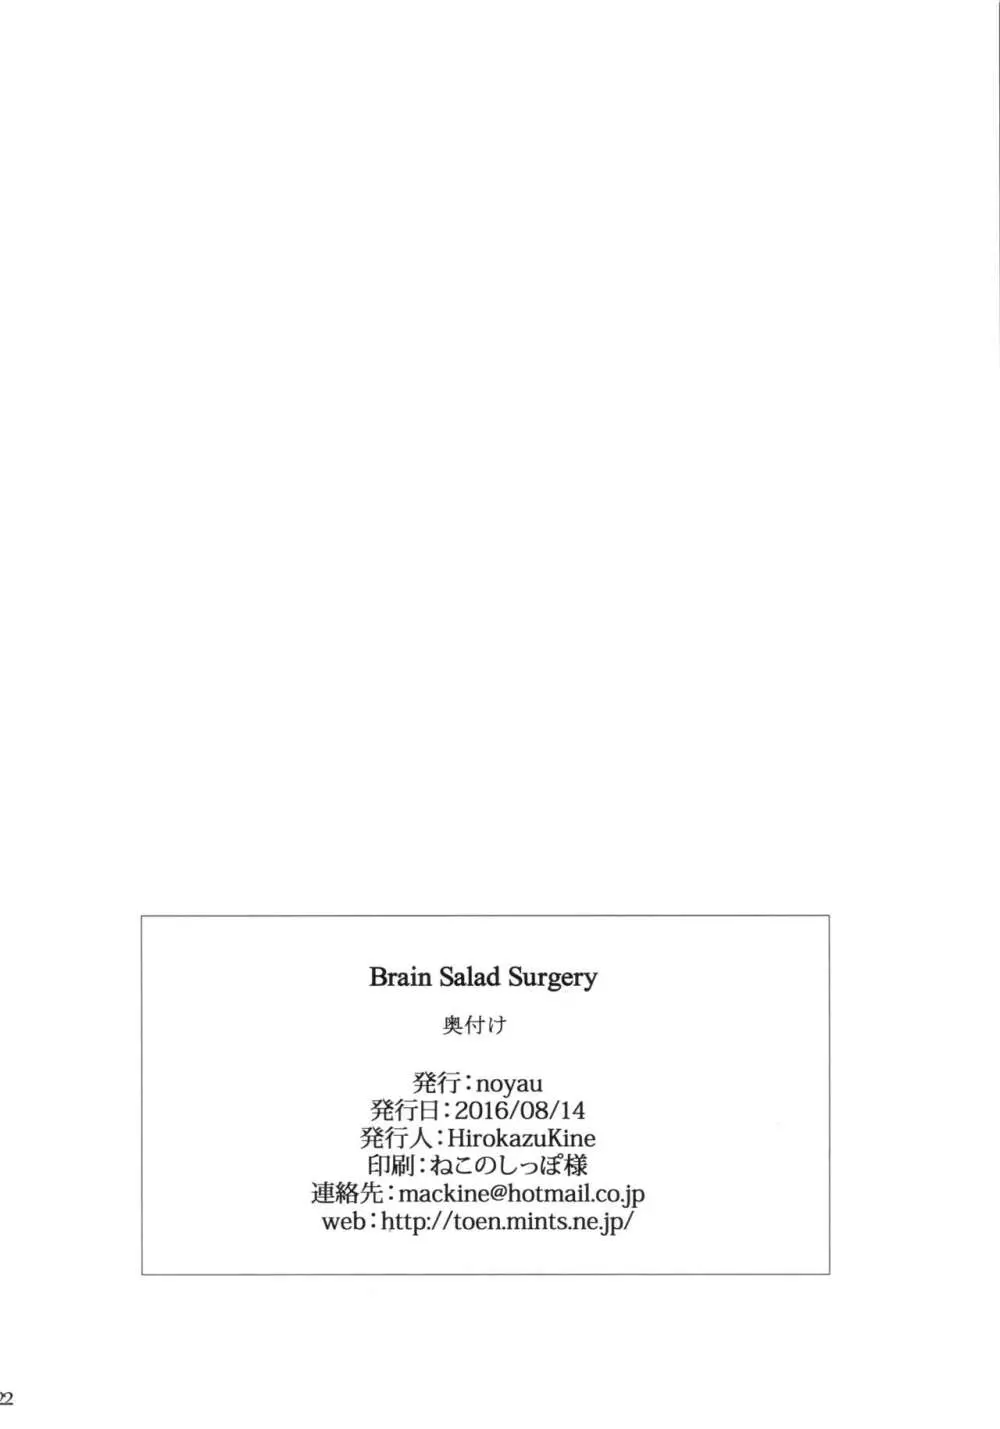 BRAIN SALAD SURGERY - page21